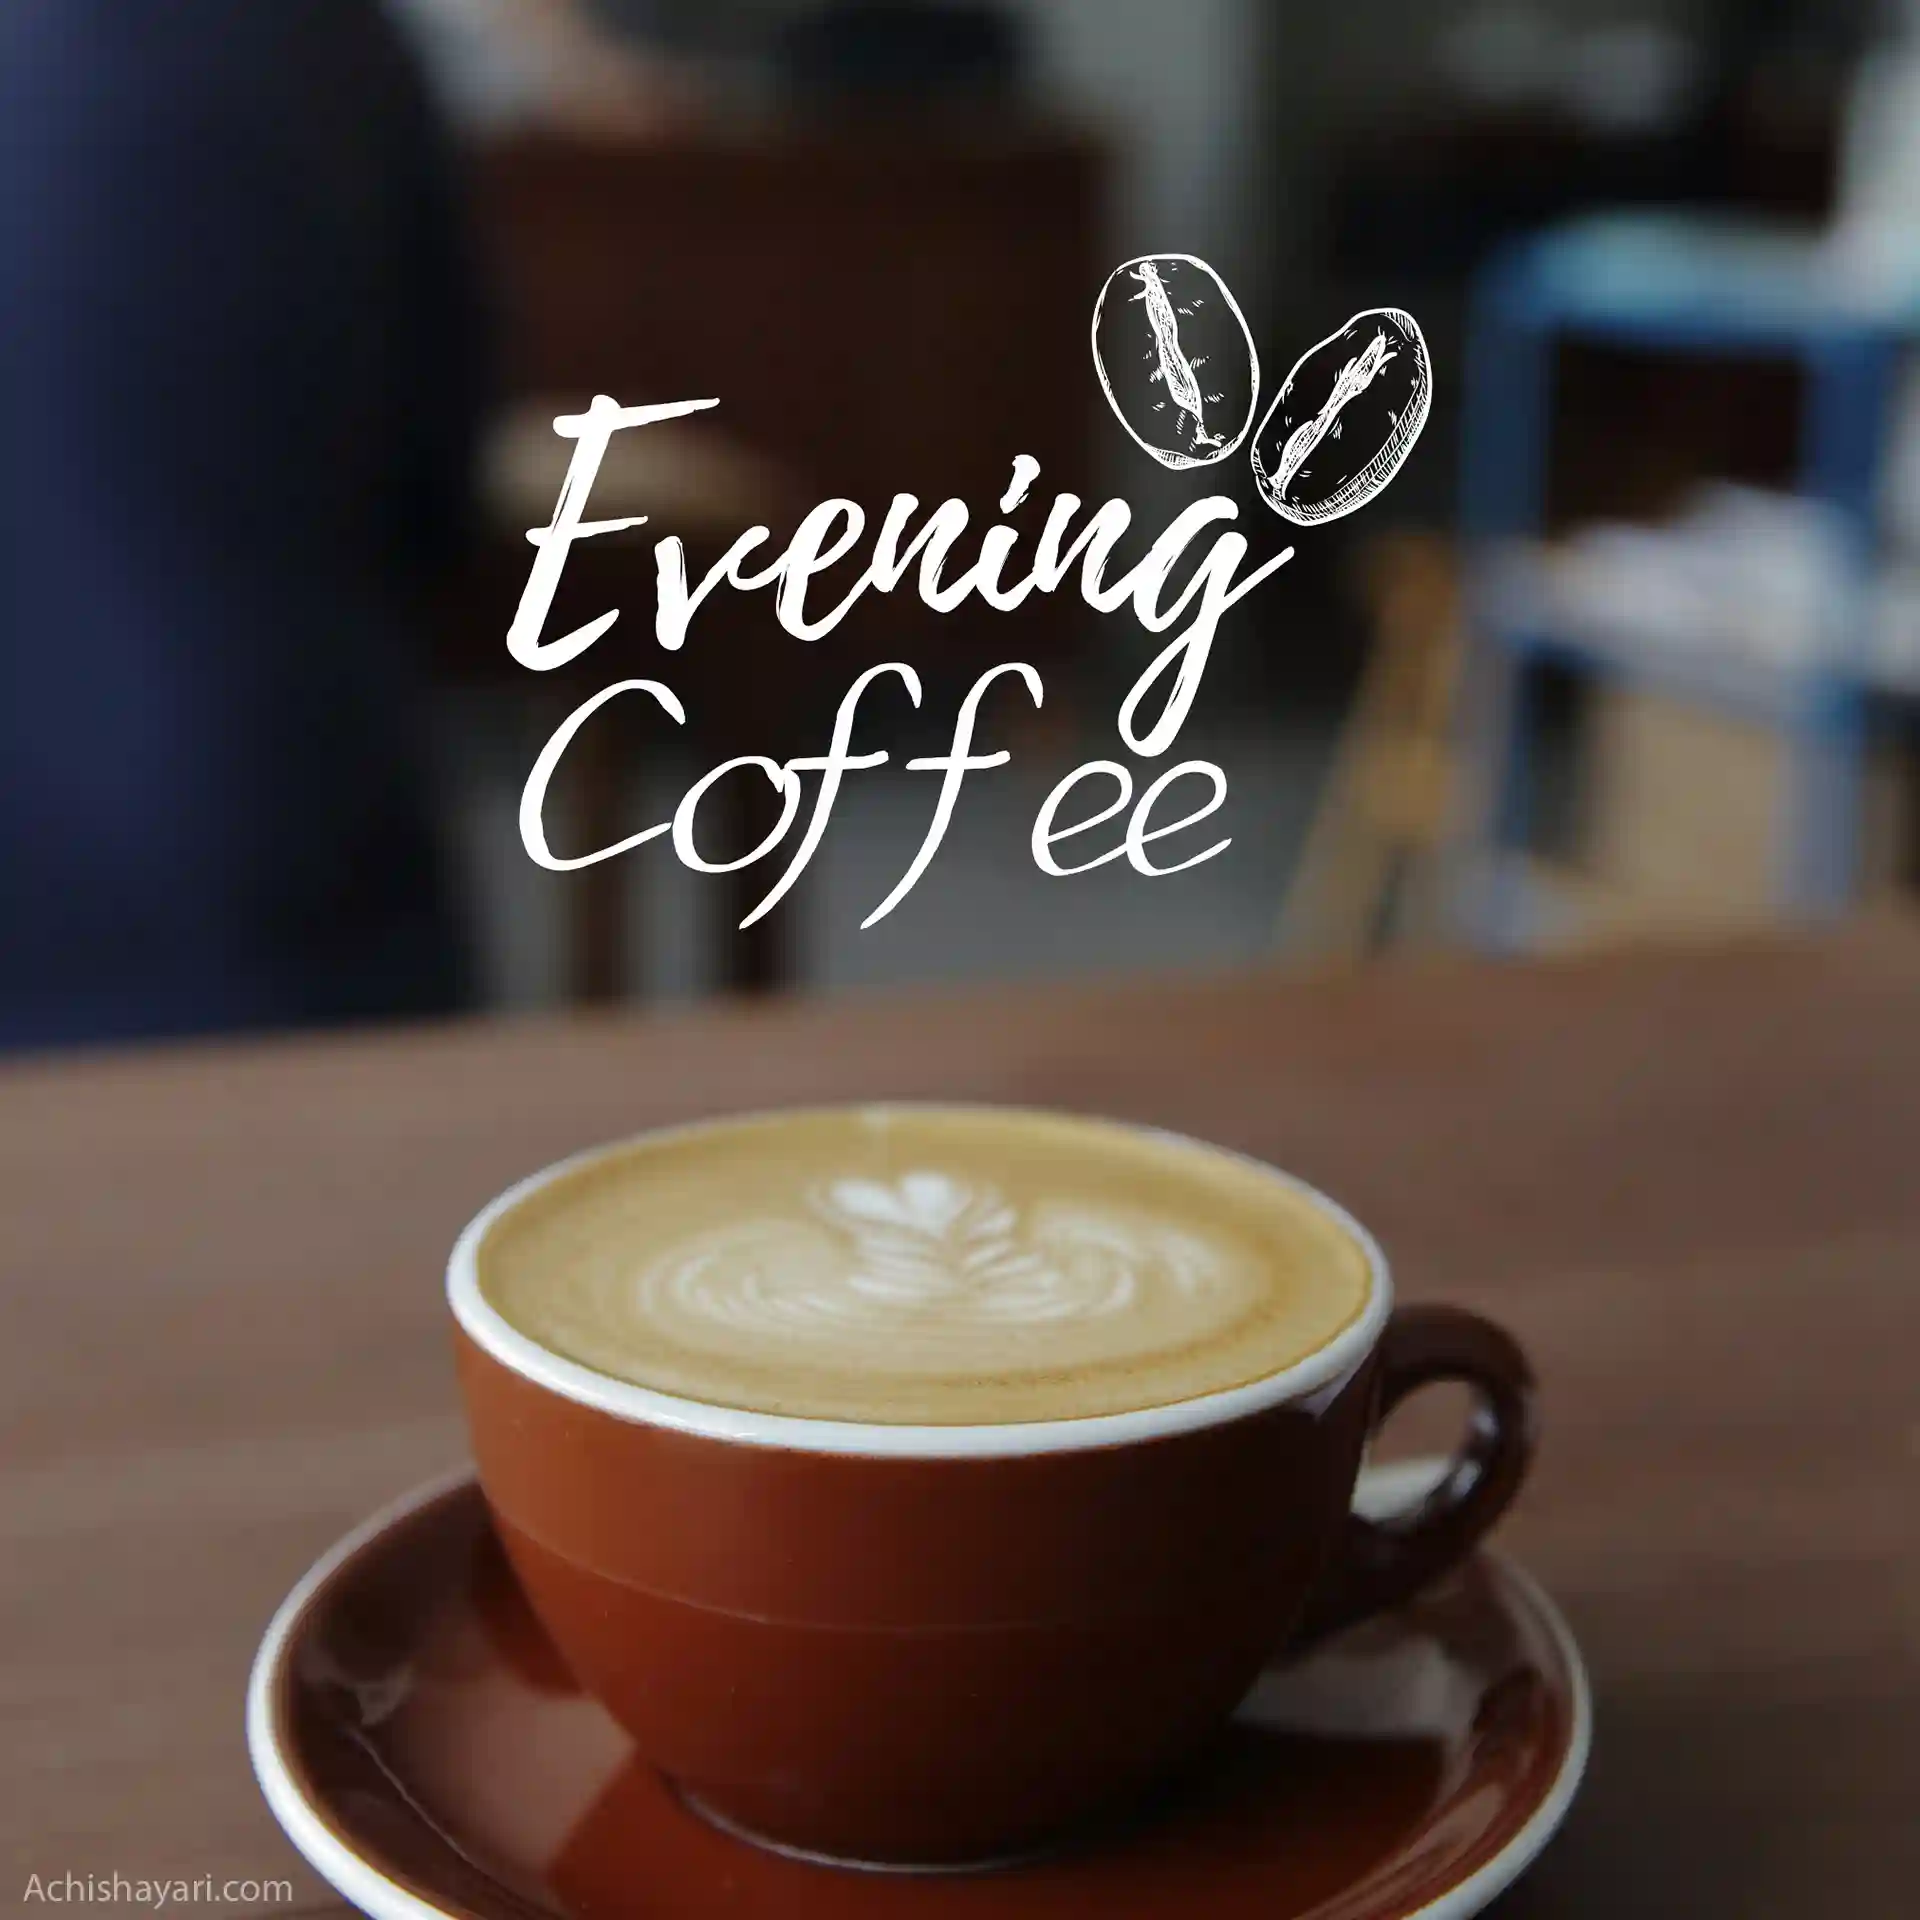 Good Evening Coffee Image